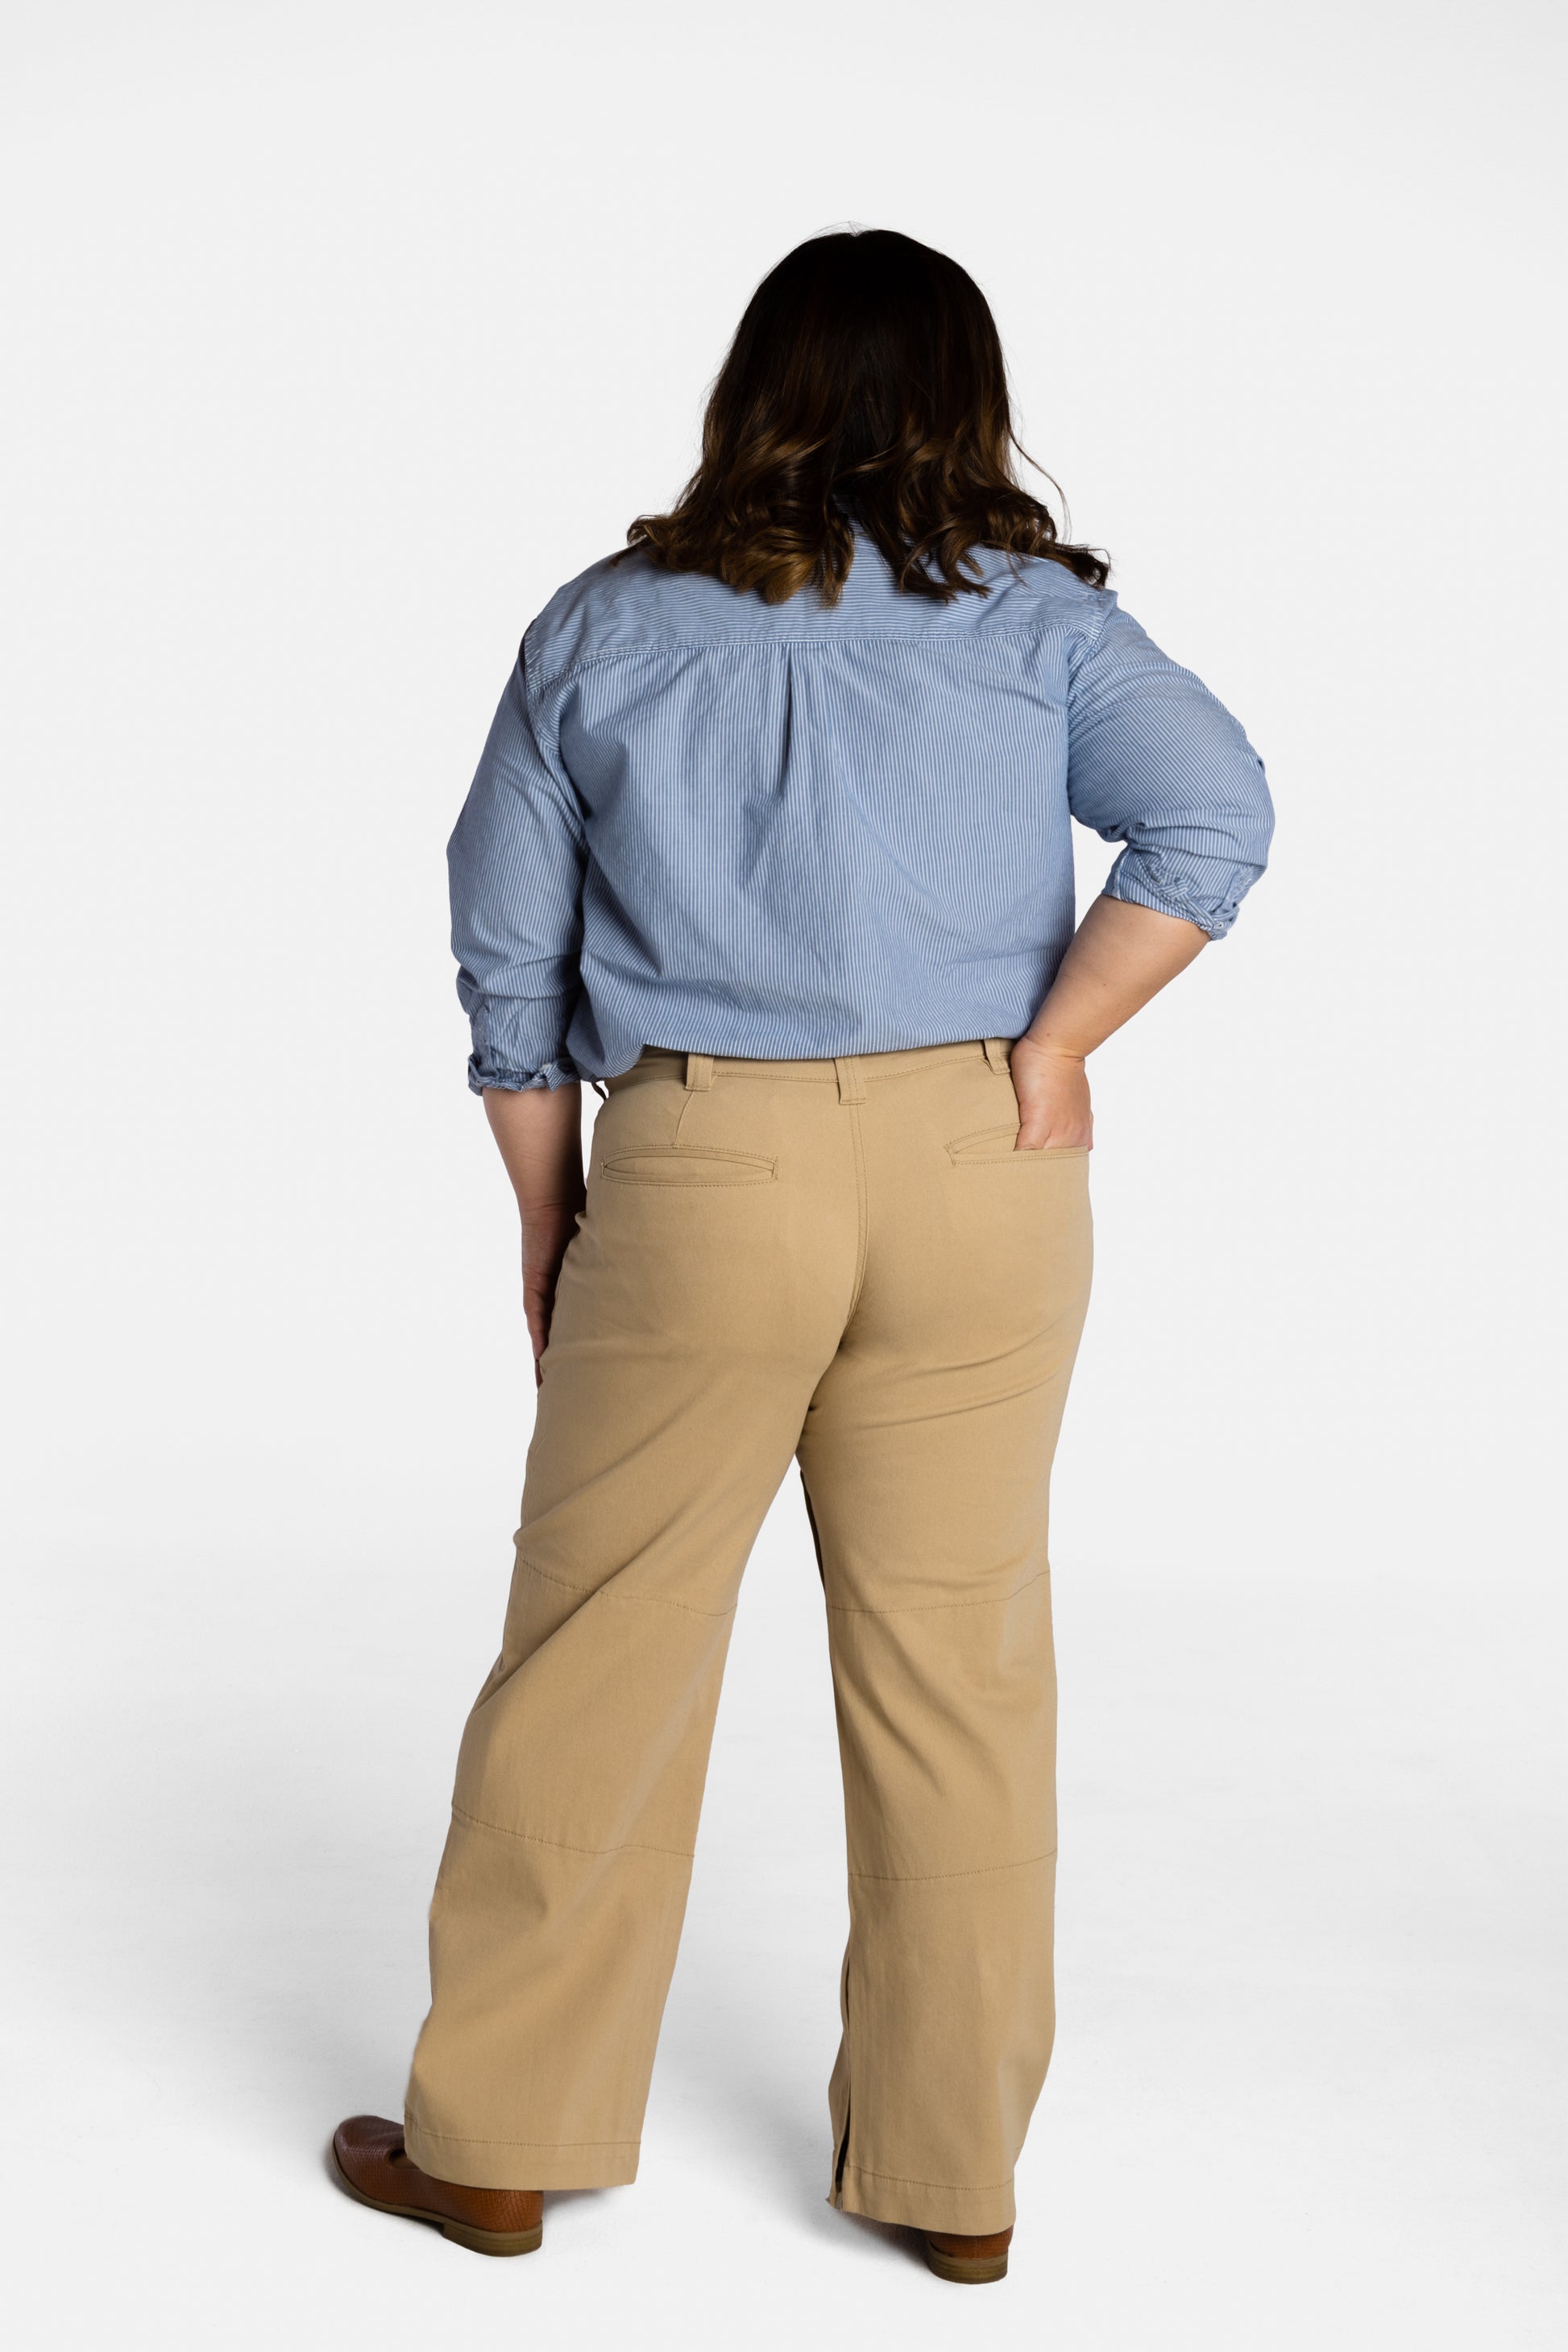 The back of Erica Cole, the founder of No Limbits, wearing the No Limbits Adaptive Women's Khaki Unlimbited Pants.